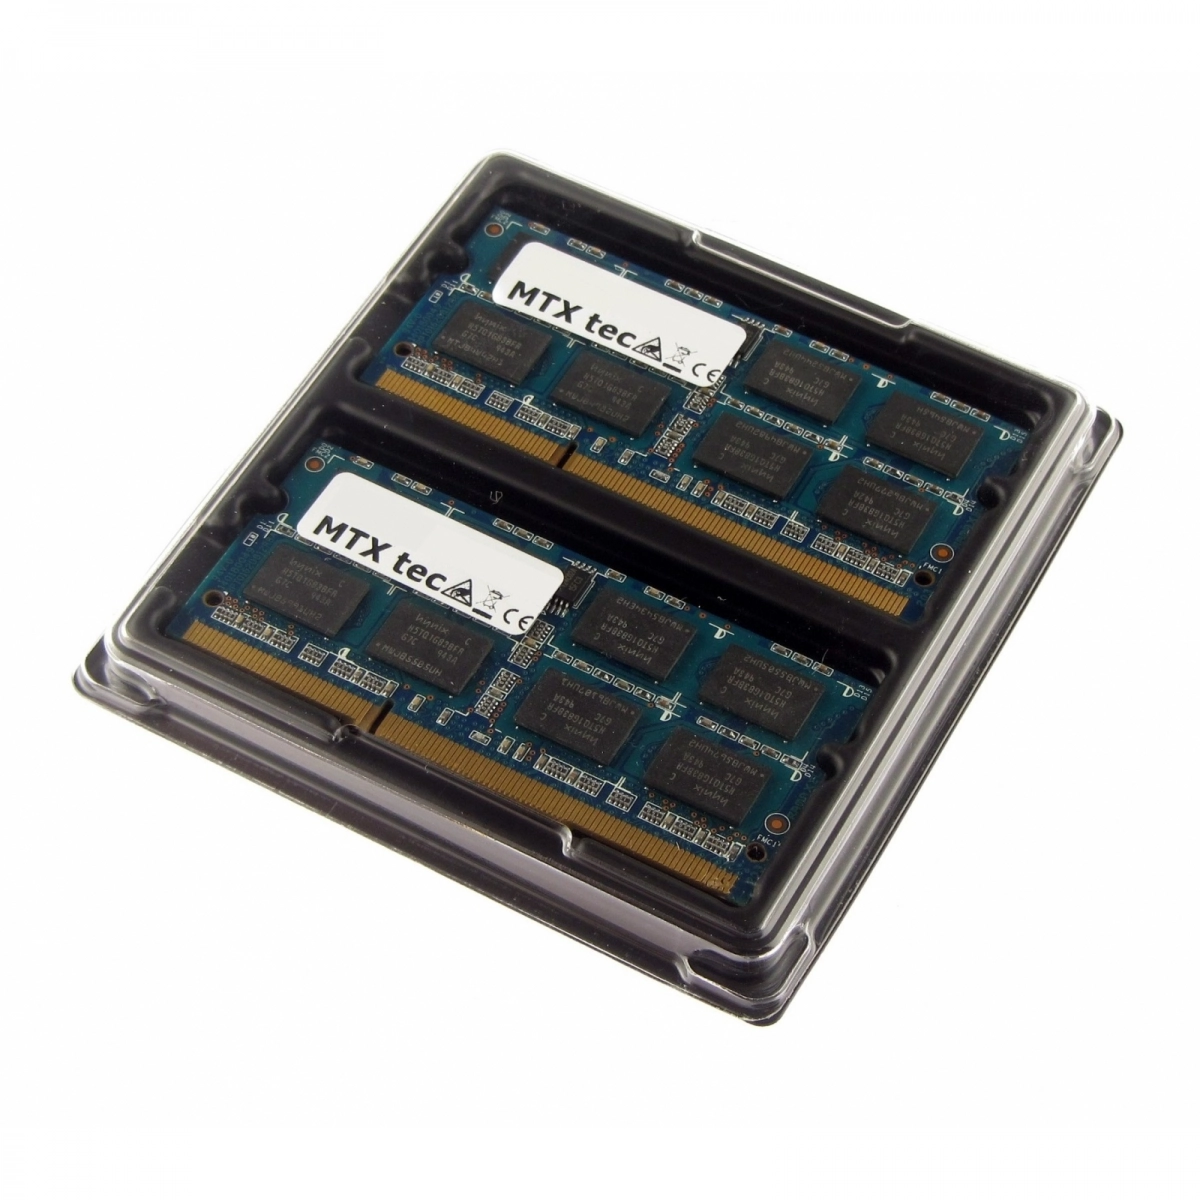 MTXtec 1GB Kit 2x 512MB DDR2 667MHz SODIMM DDR2 PC2-5300, 200 Pin RAM Laptop-Speicher